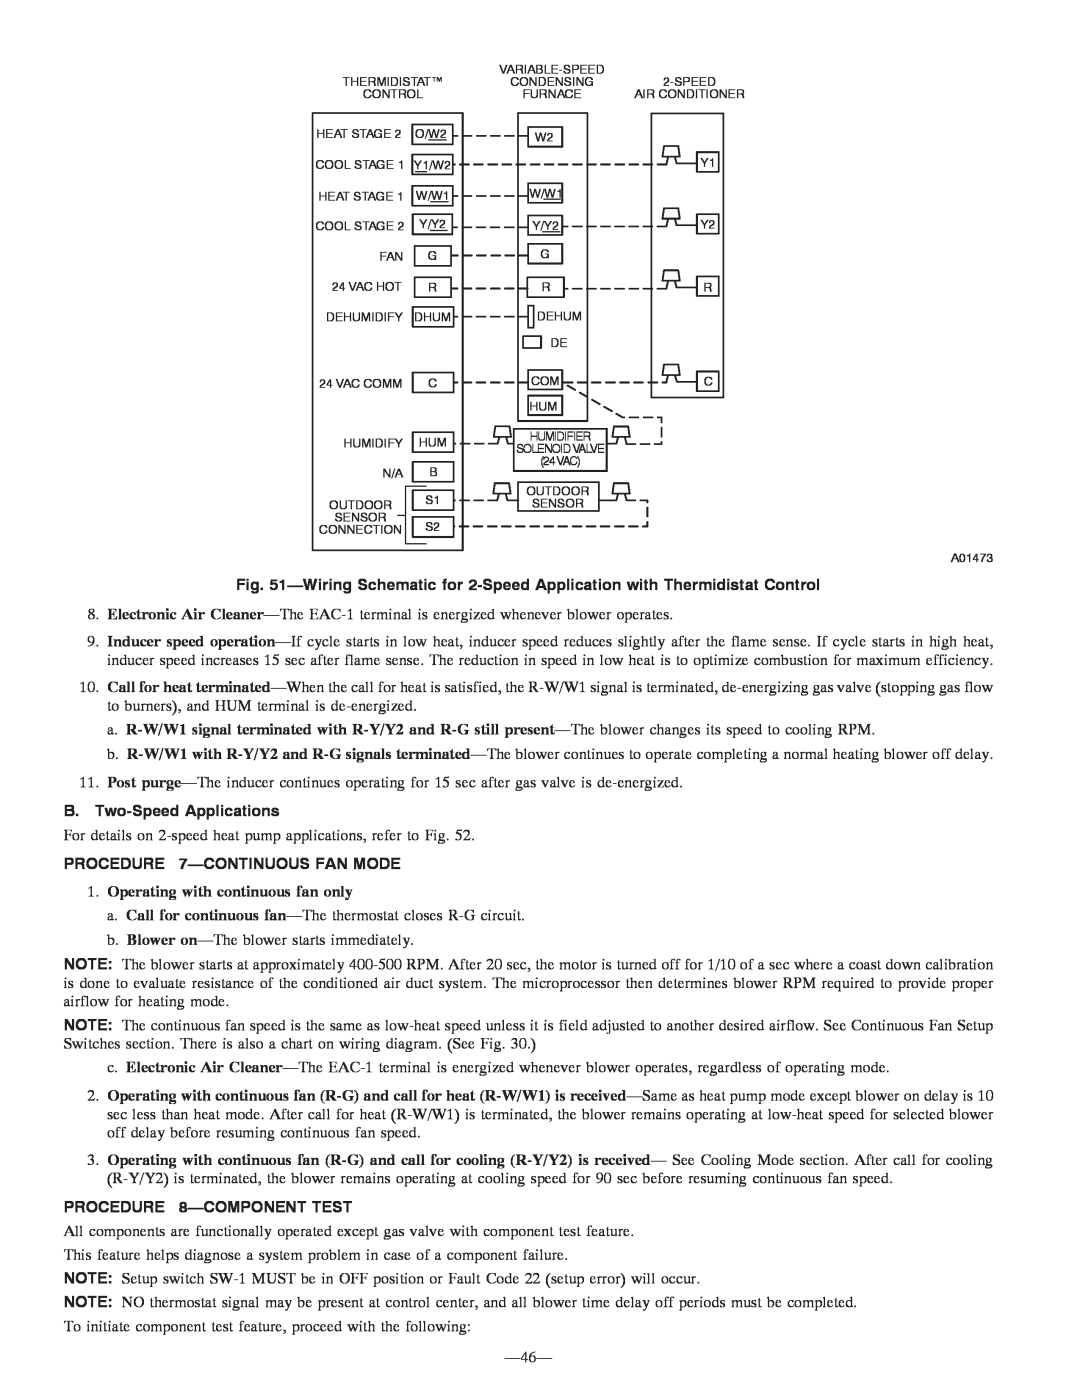 Bryant 355MAV instruction manual B. Two-SpeedApplications, PROCEDURE 7-CONTINUOUSFAN MODE, PROCEDURE 8-COMPONENTTEST 